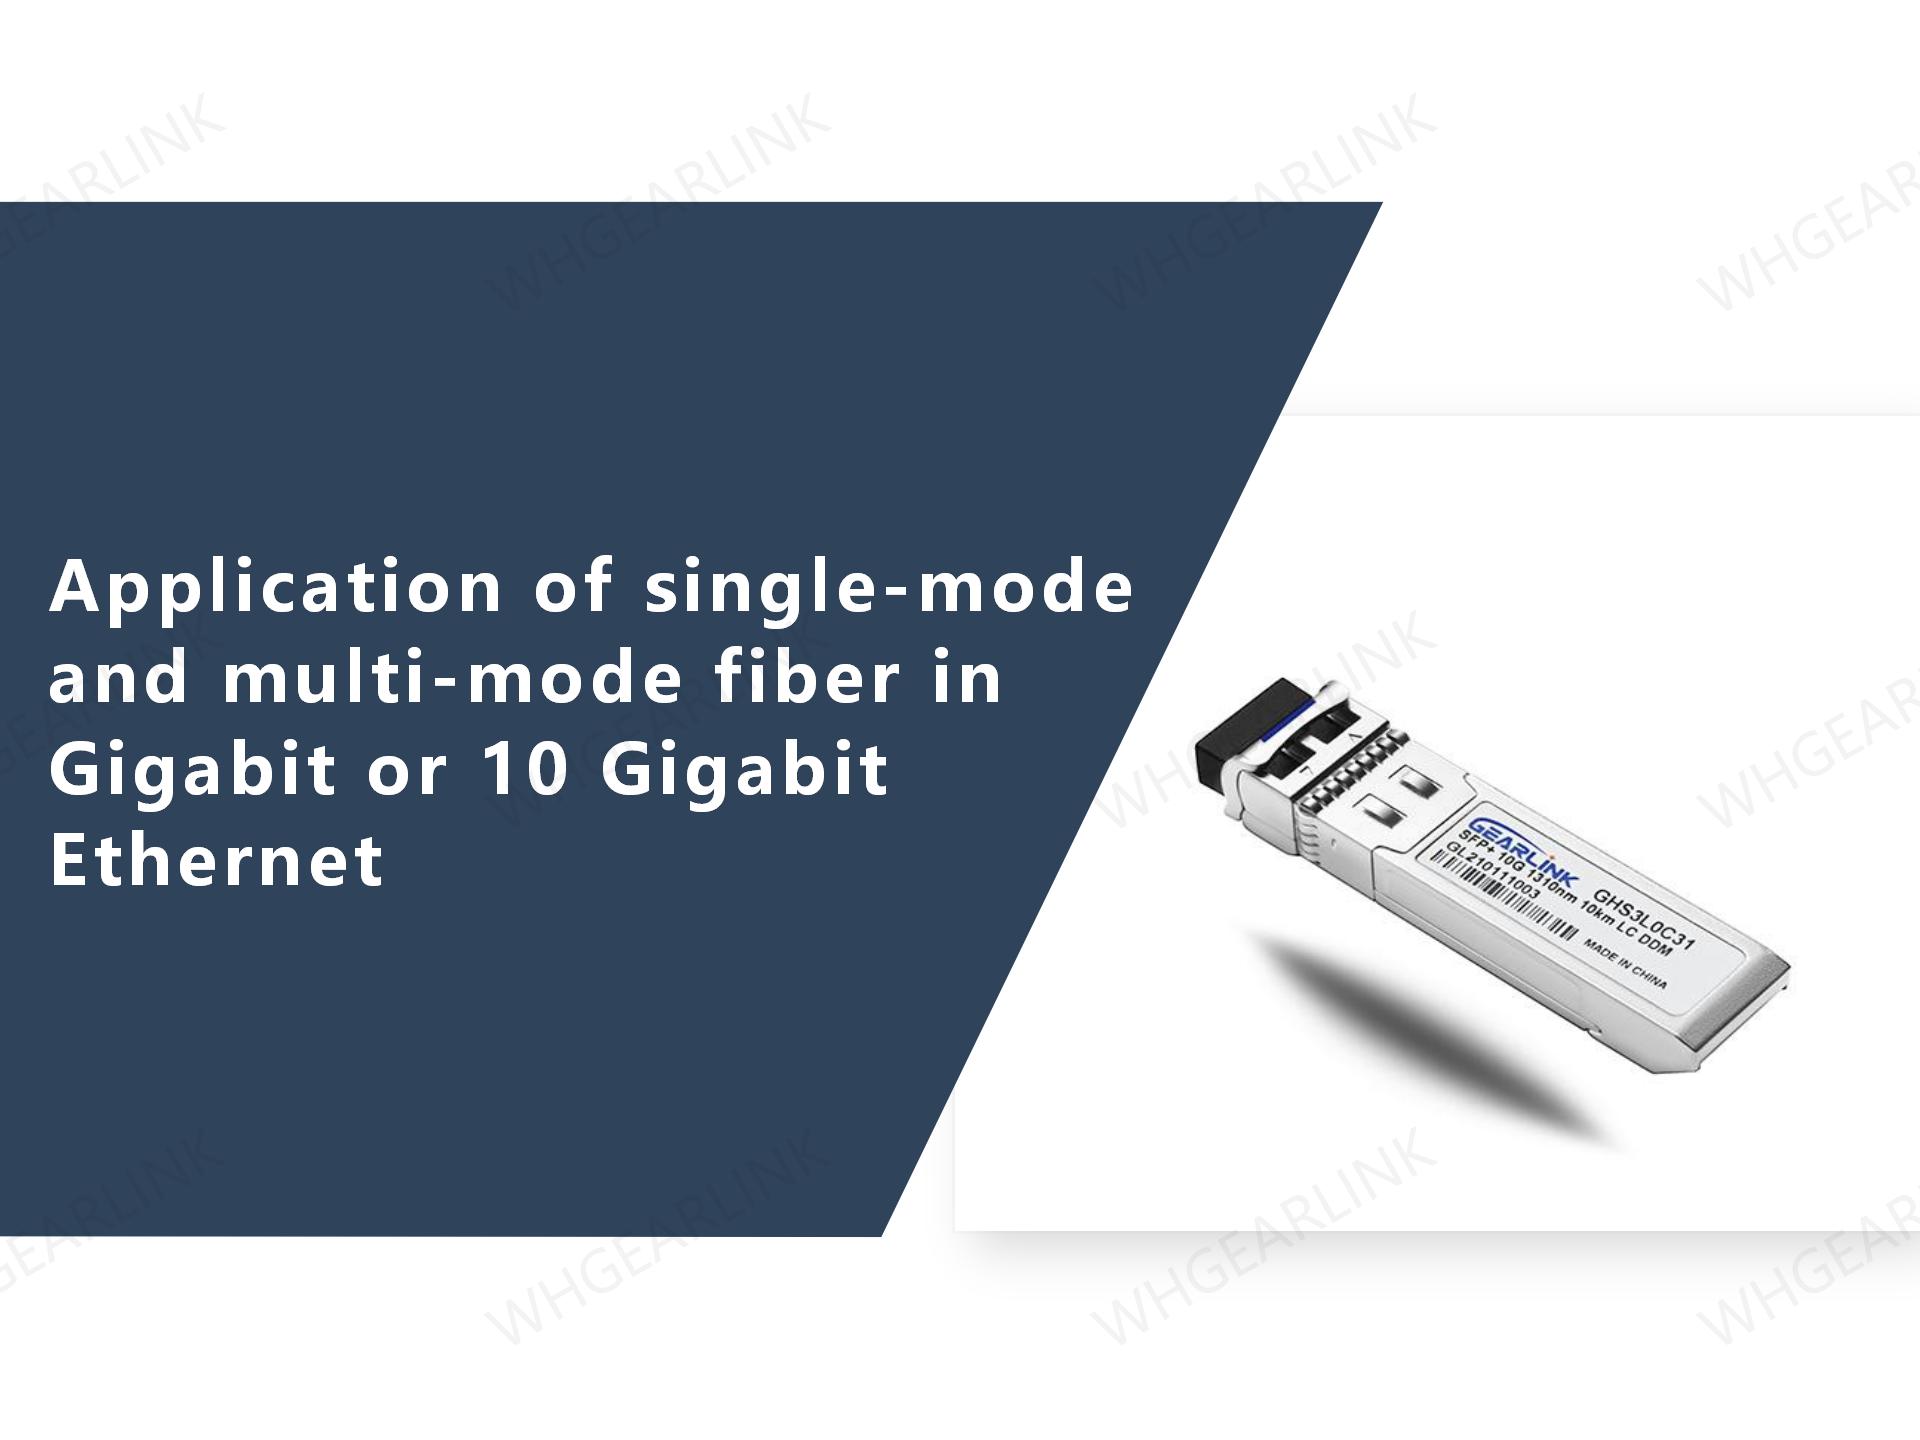 Application of single-mode and multi-mode fiber in Gigabit or 10 Gigabit Ethernet